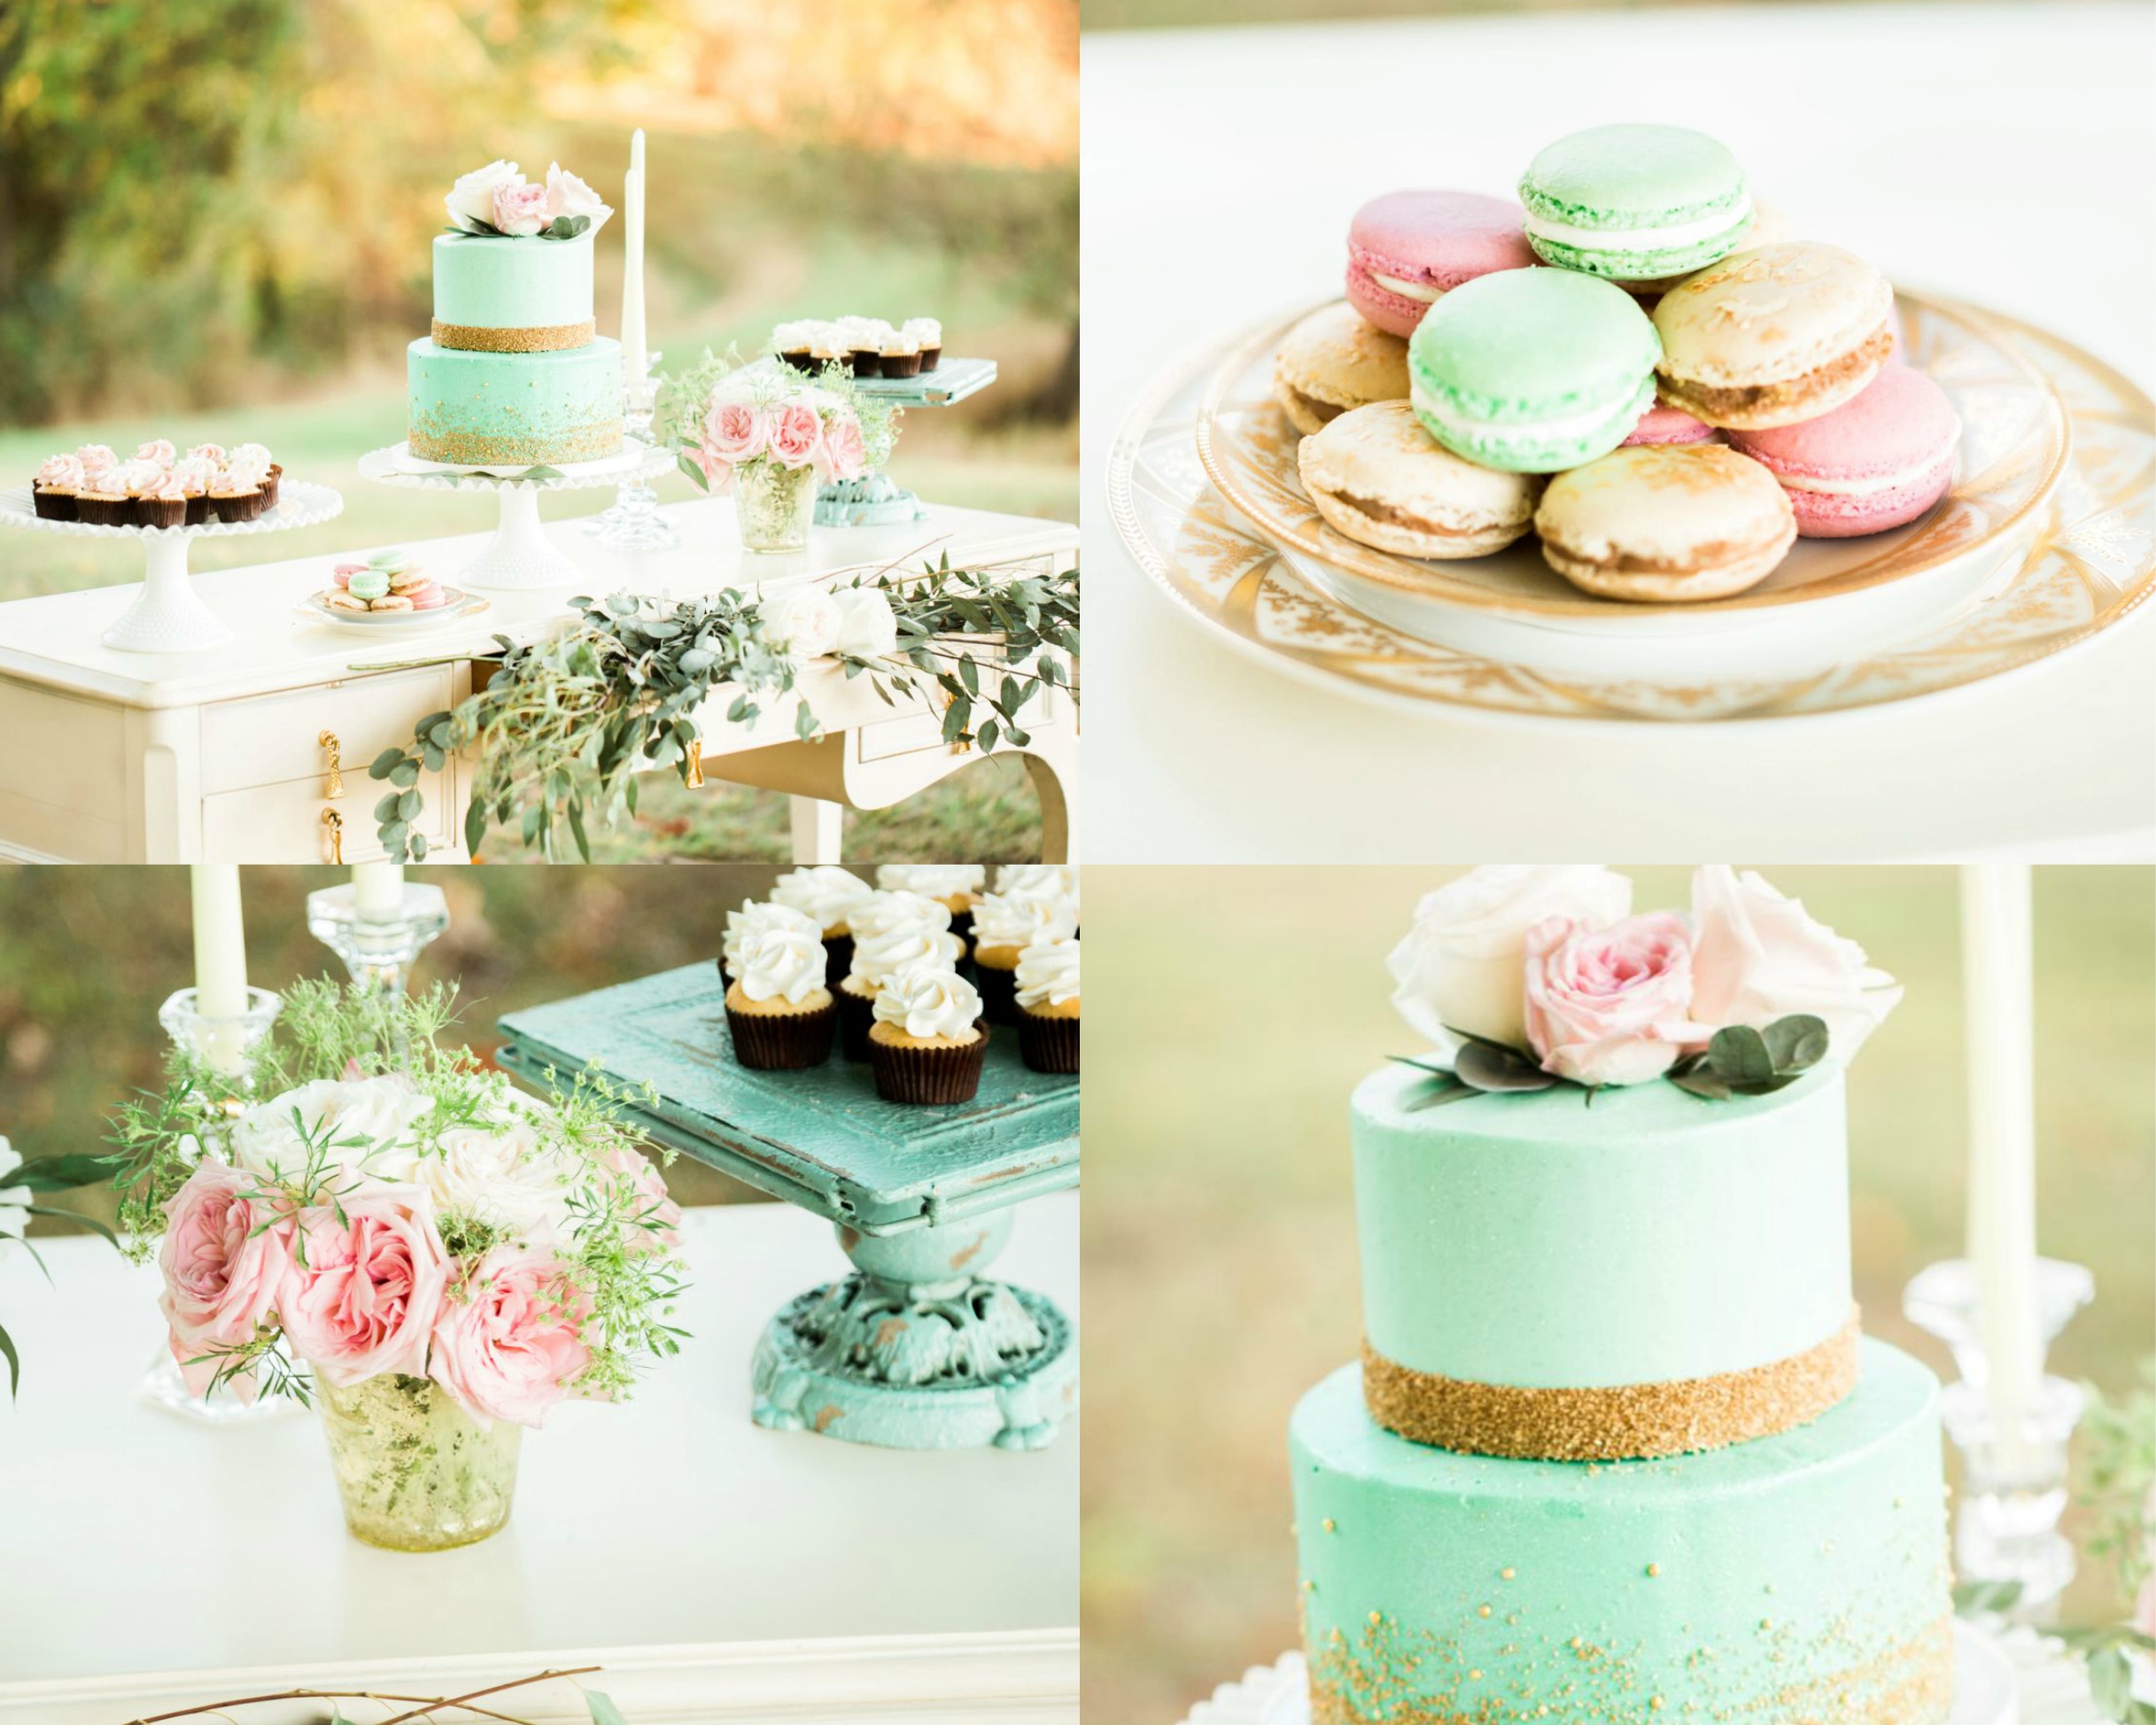 Mint garden wedding collage - alicia wiley photography - Copy.jpg